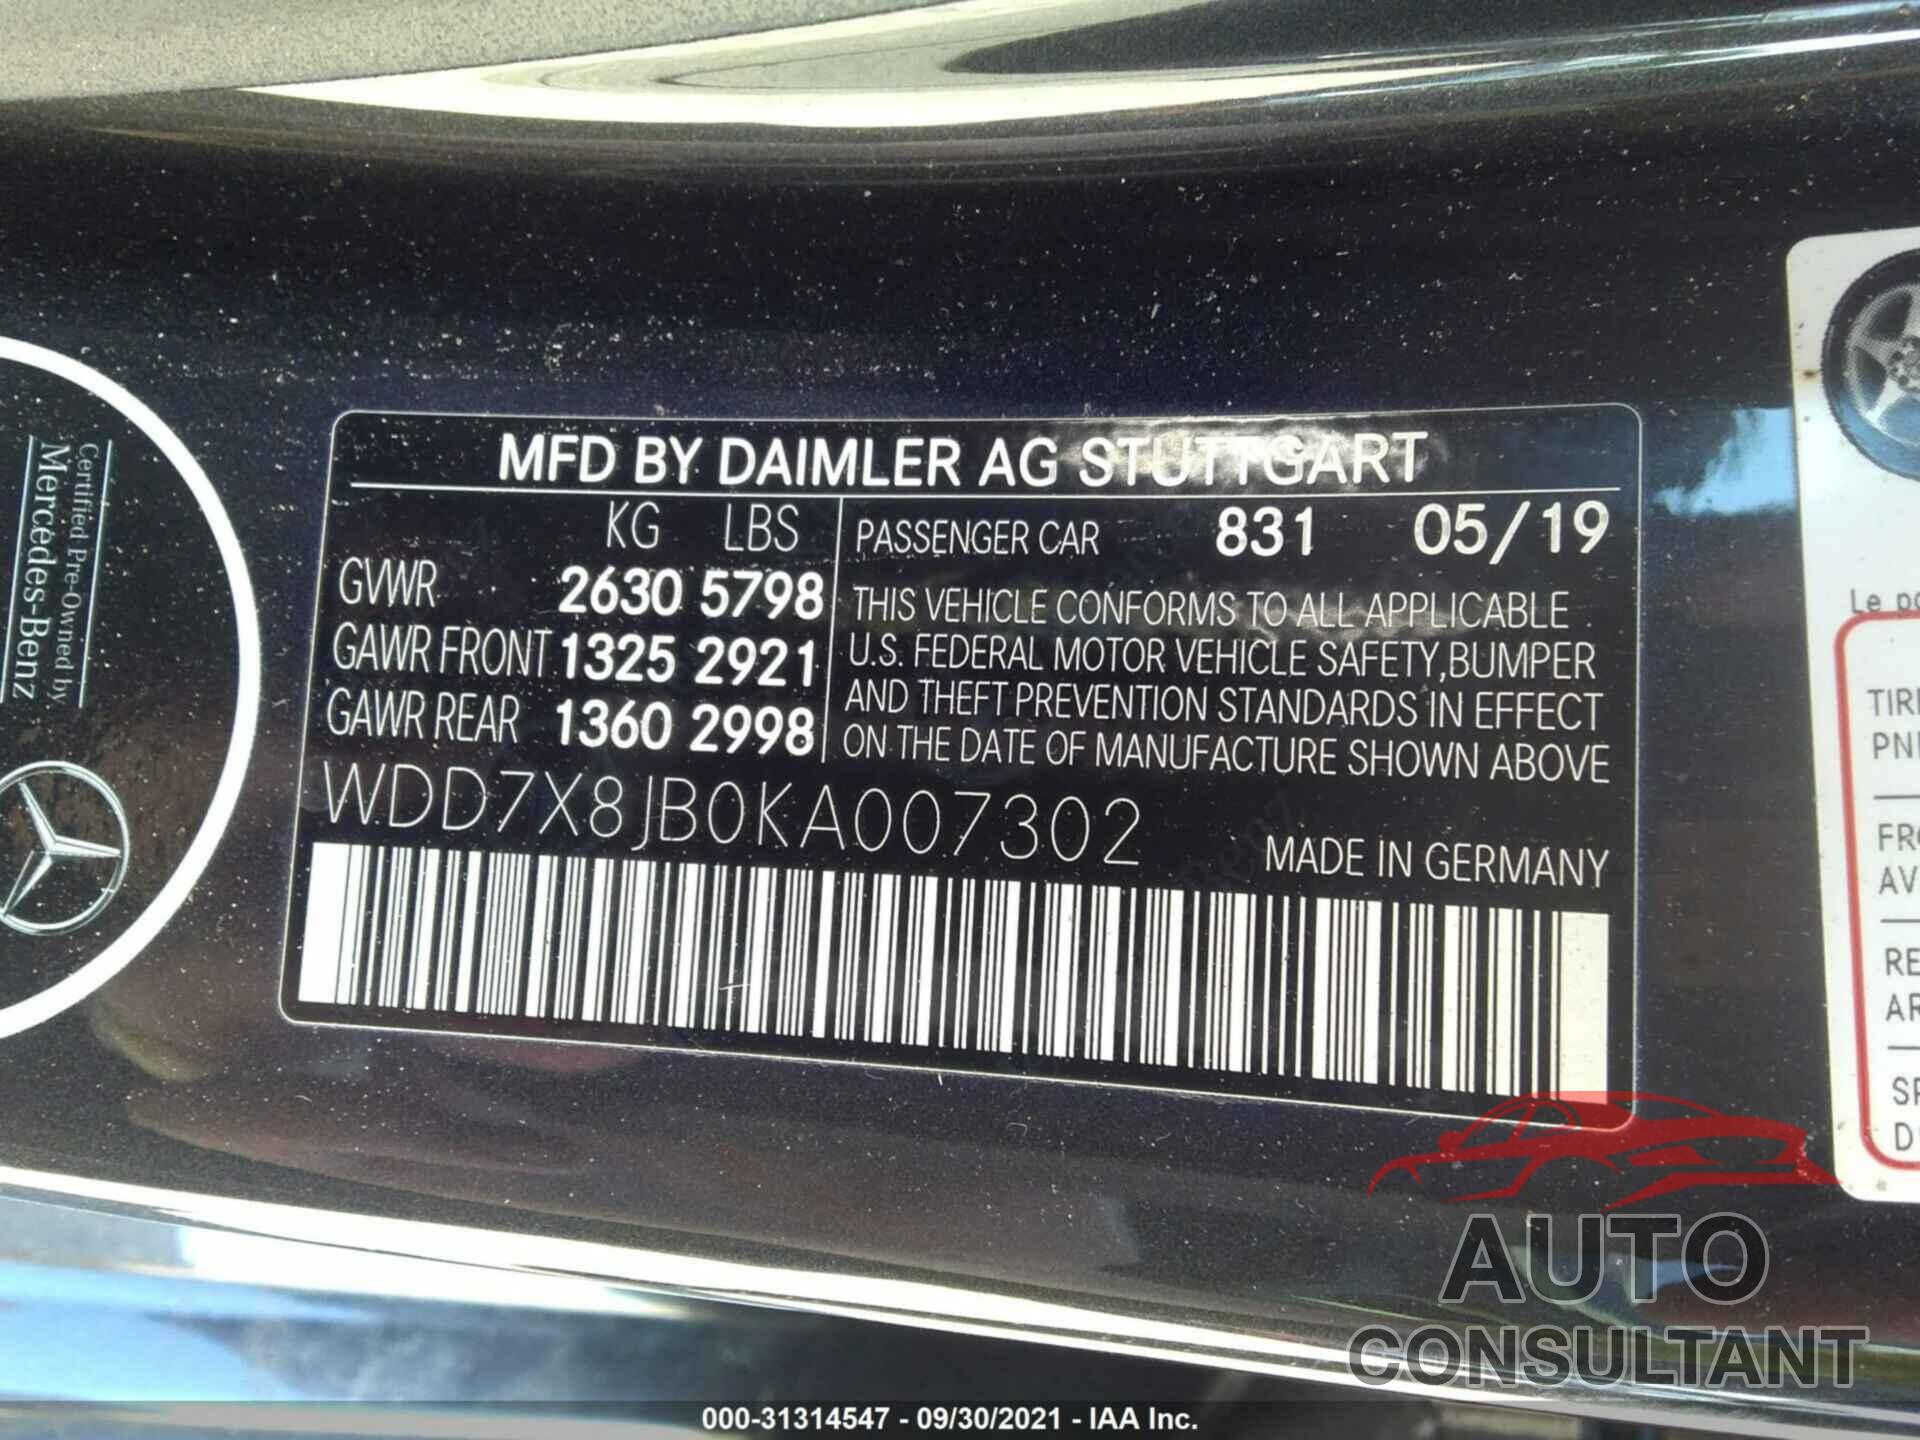 MERCEDES-BENZ AMG GT 2019 - WDD7X8JB0KA007302